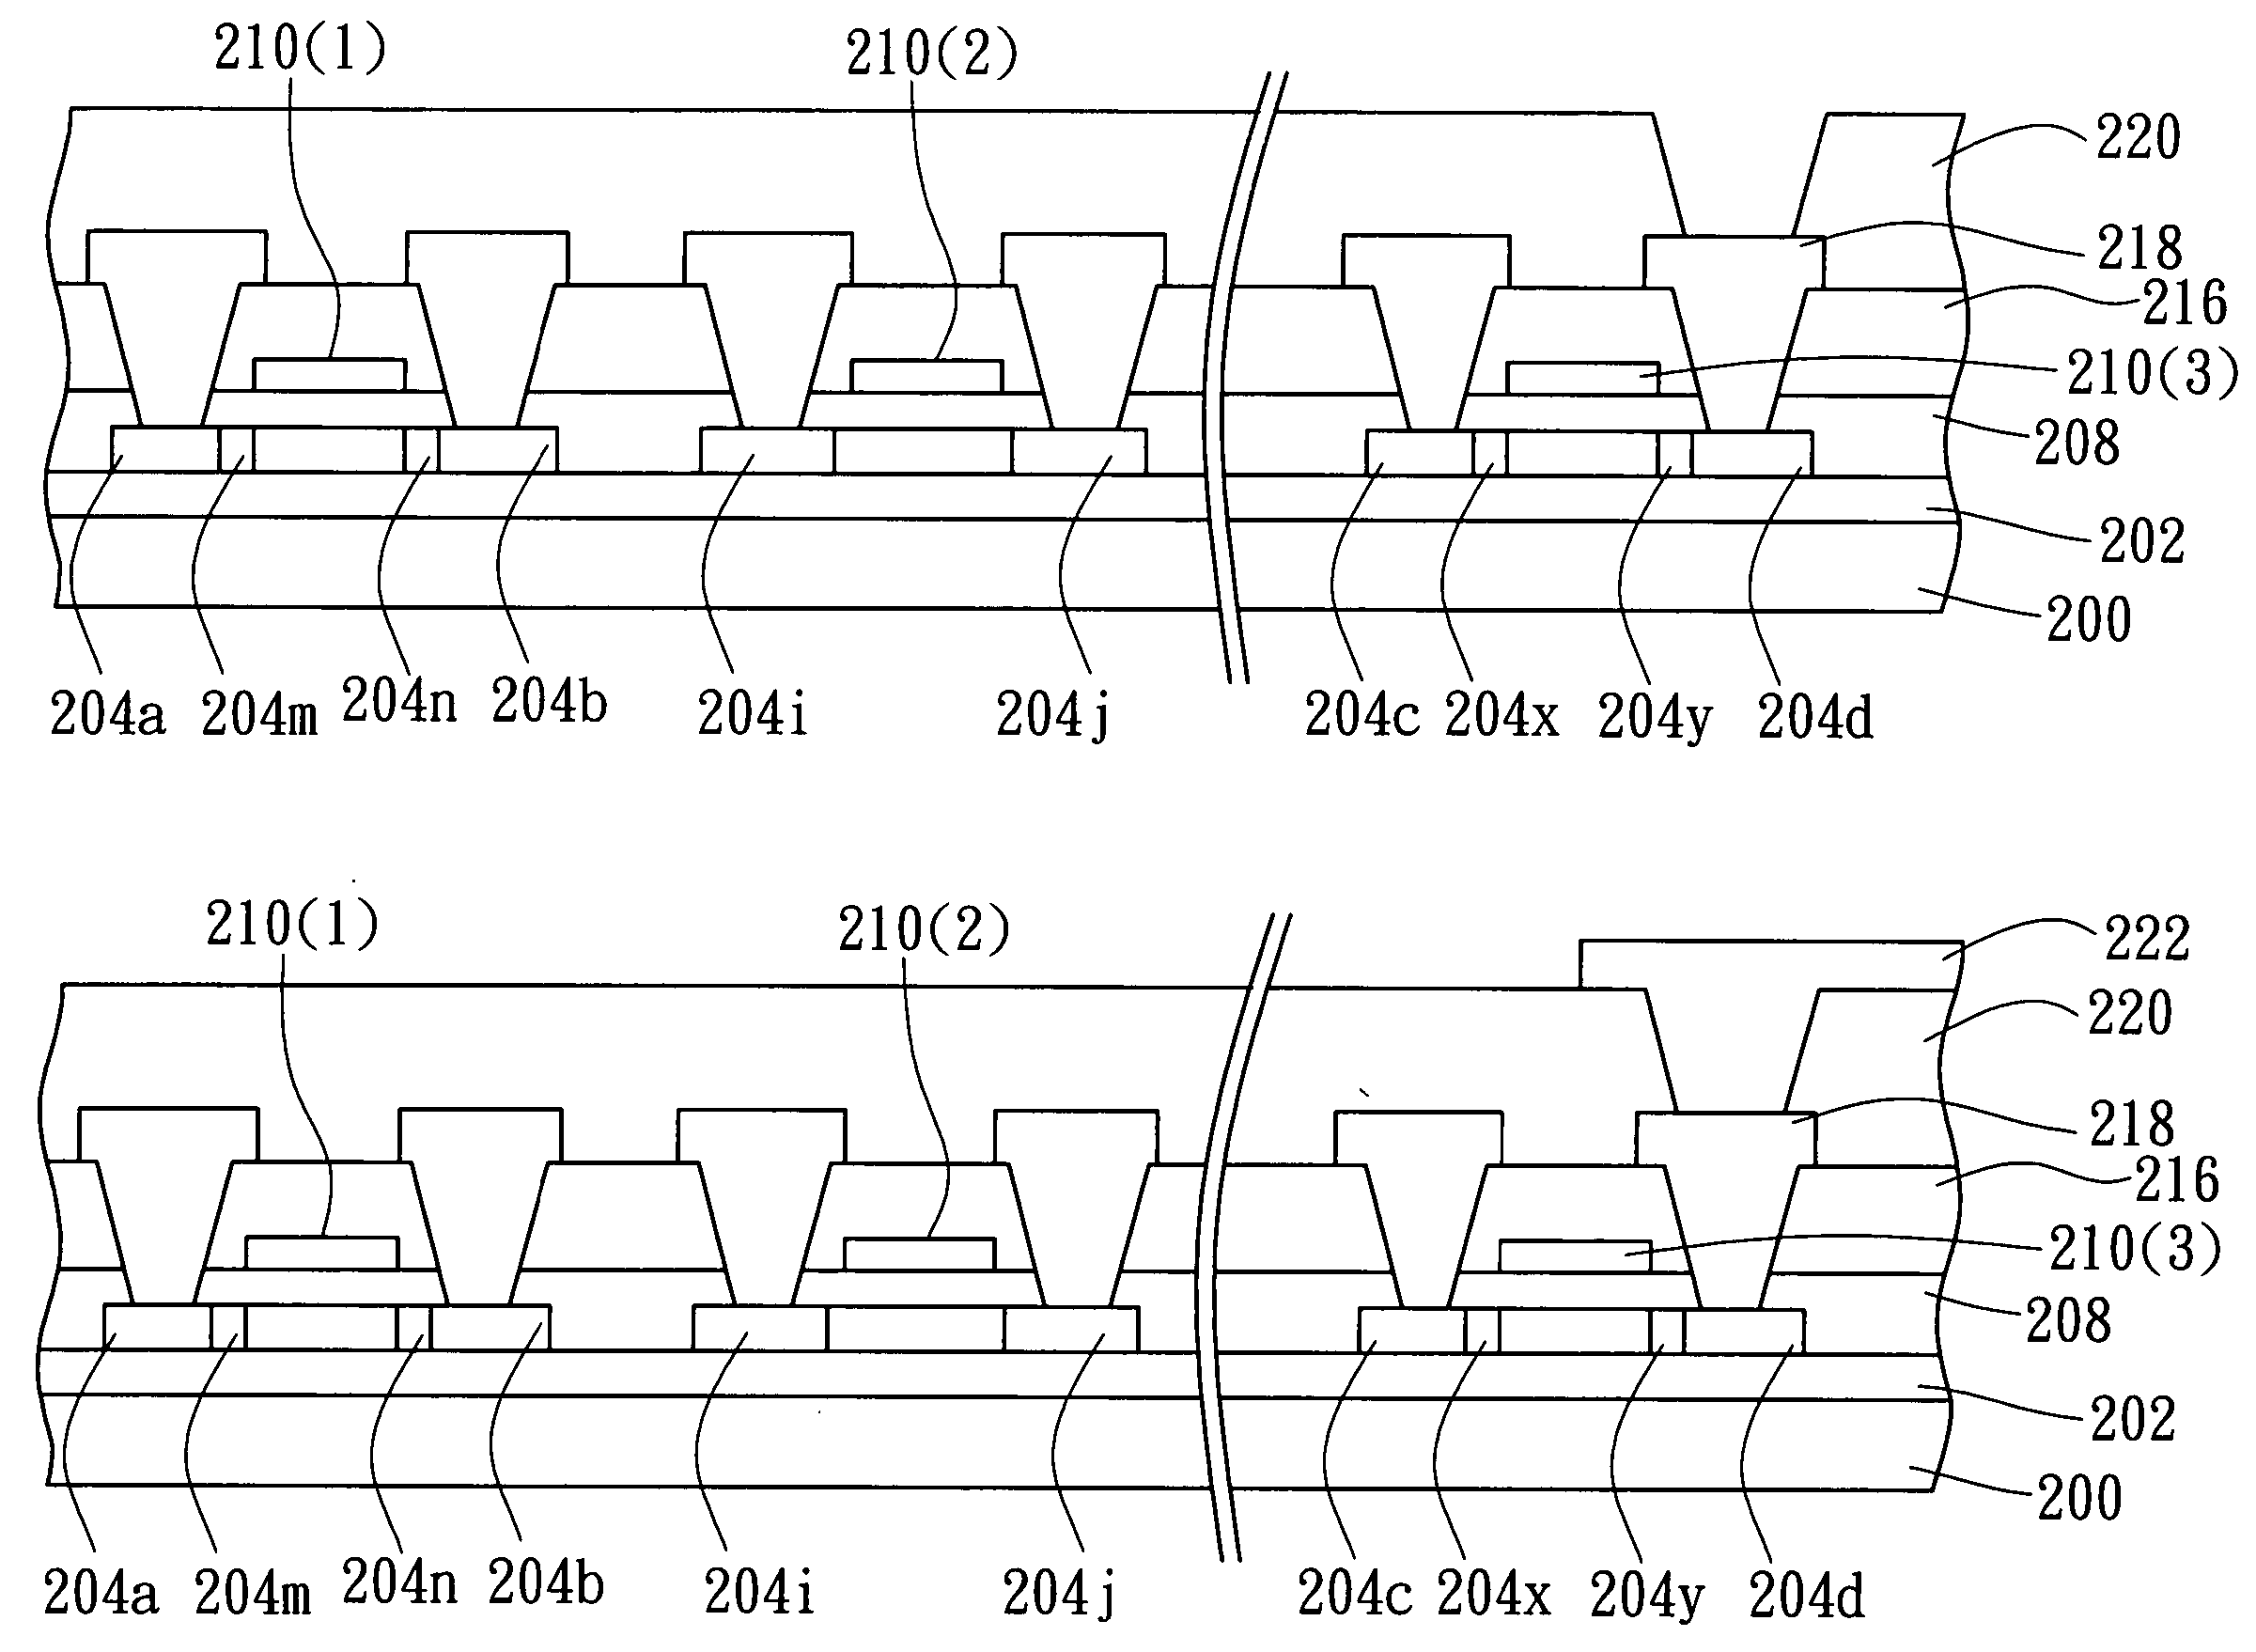 Method of forming a CMOS transistor